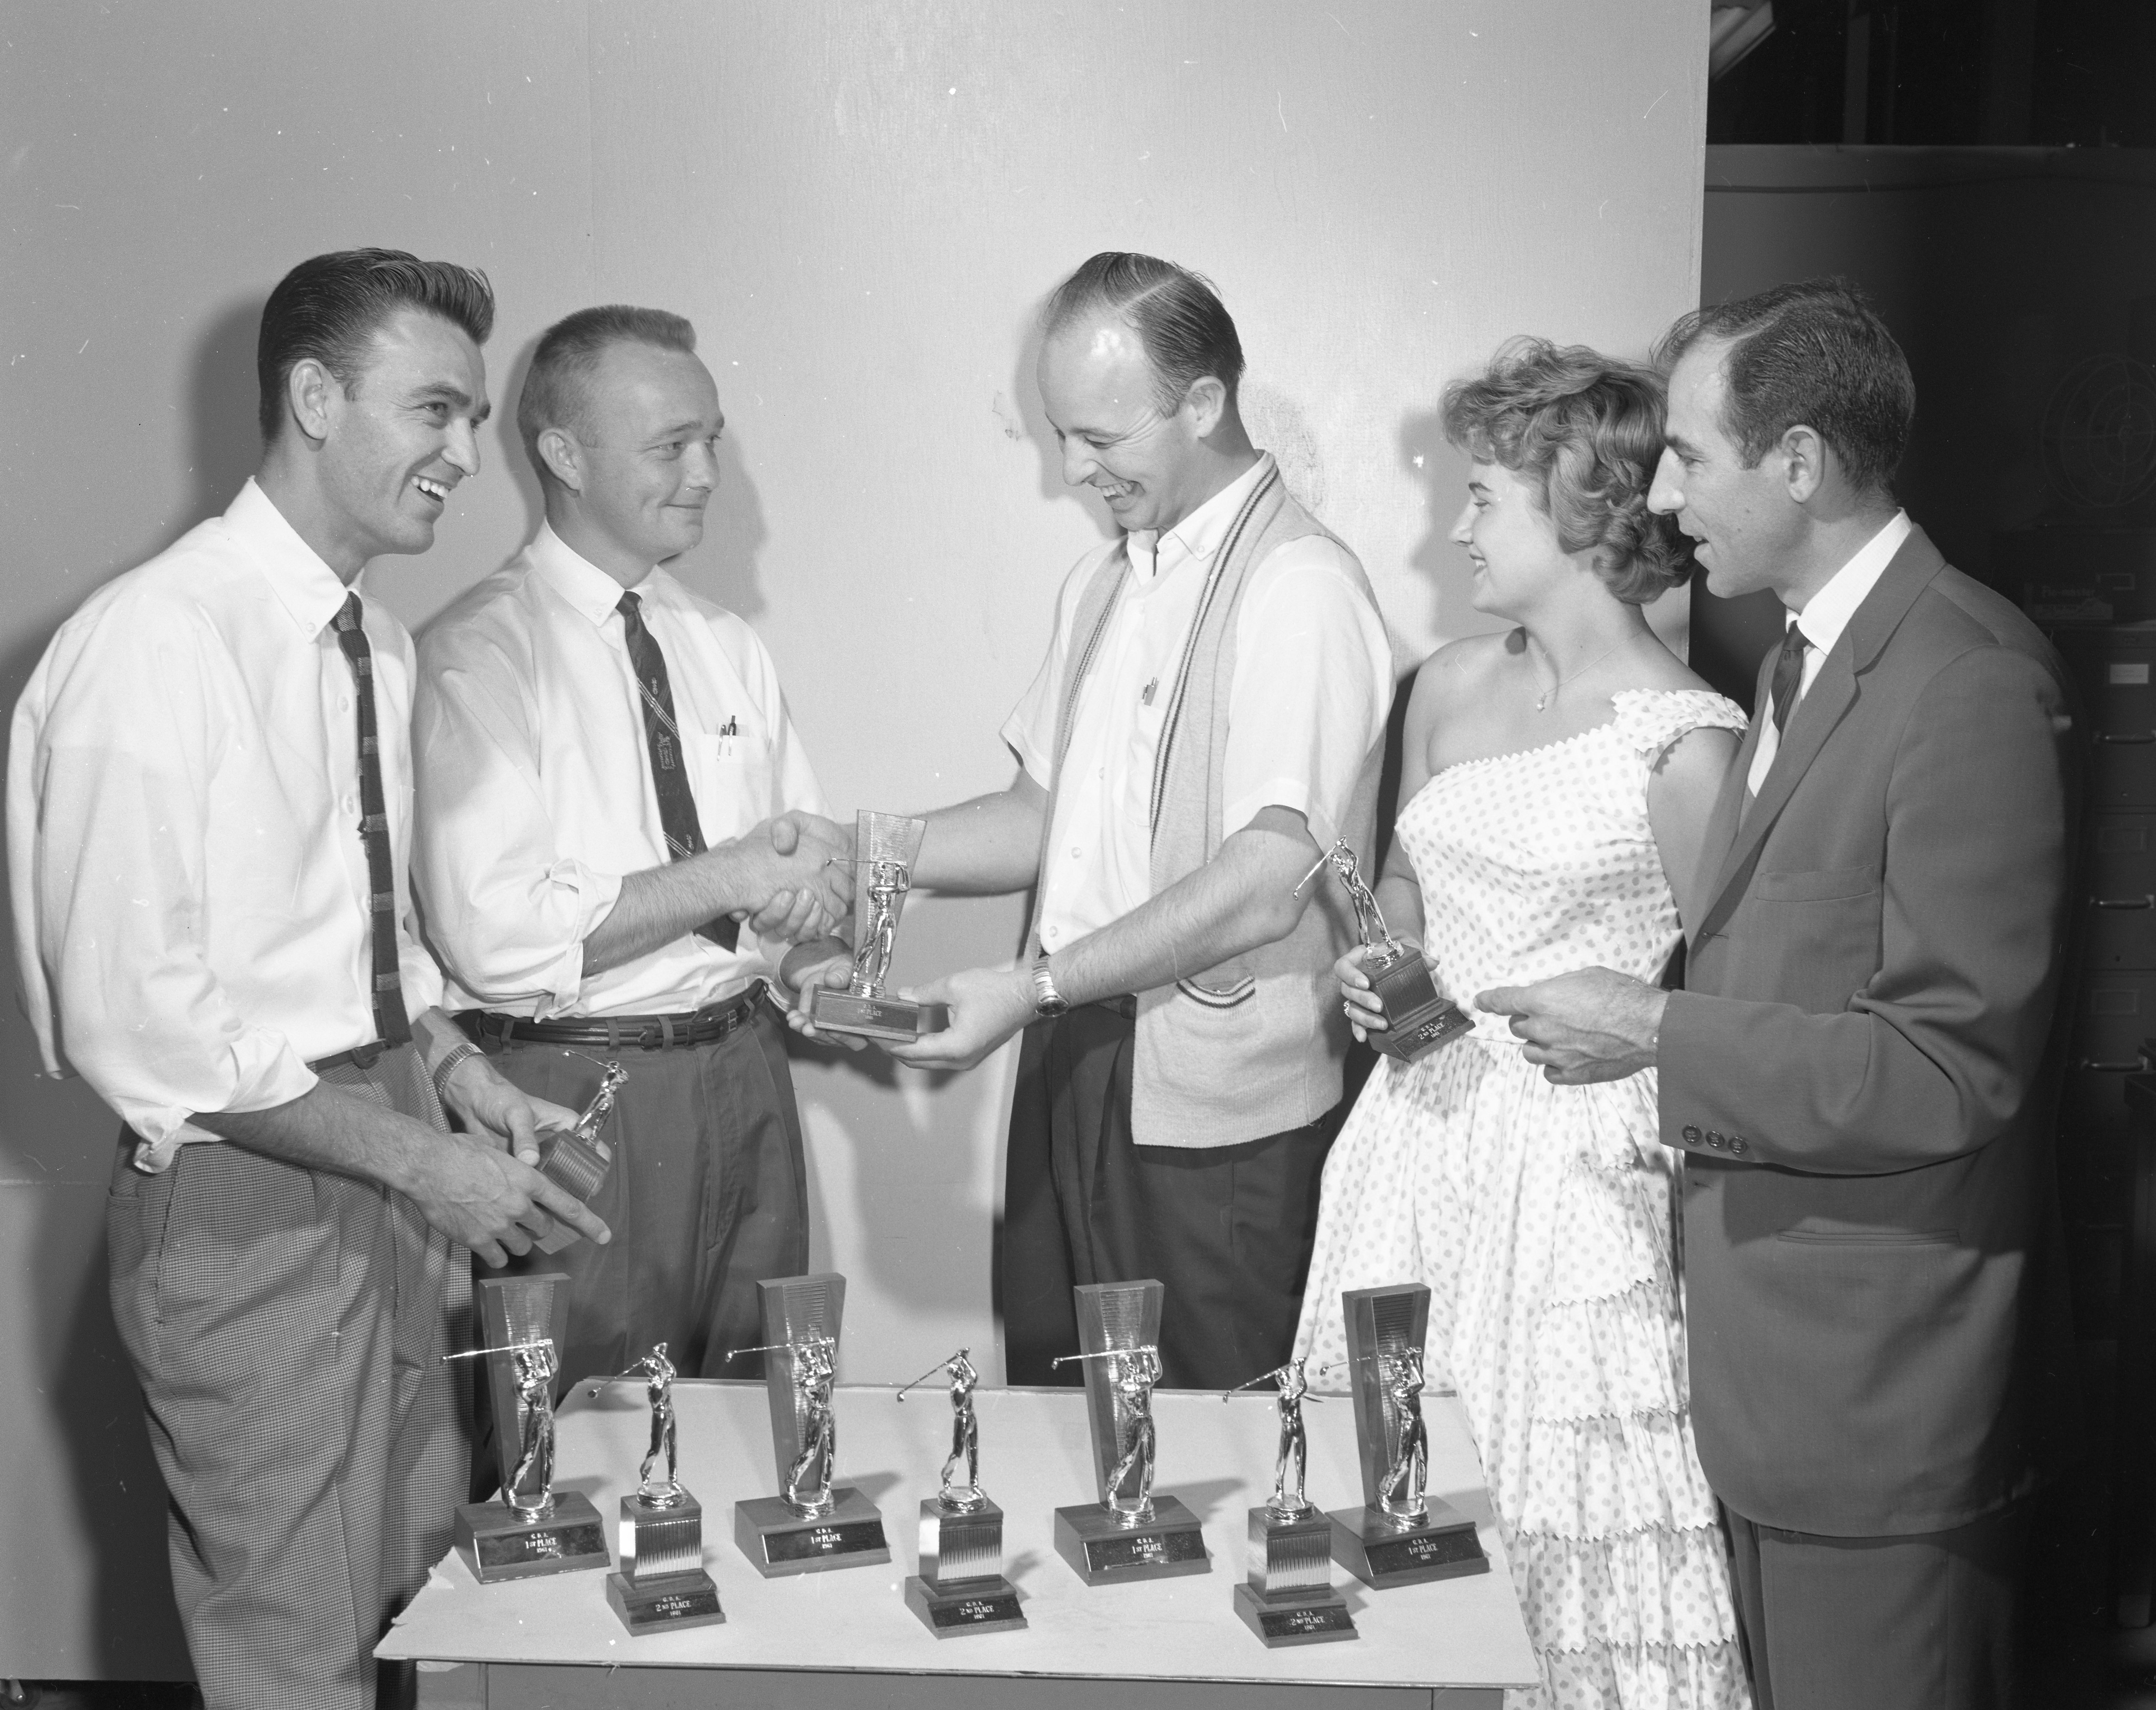 Convair clubs trophy presentation on August 14th, 1961. 